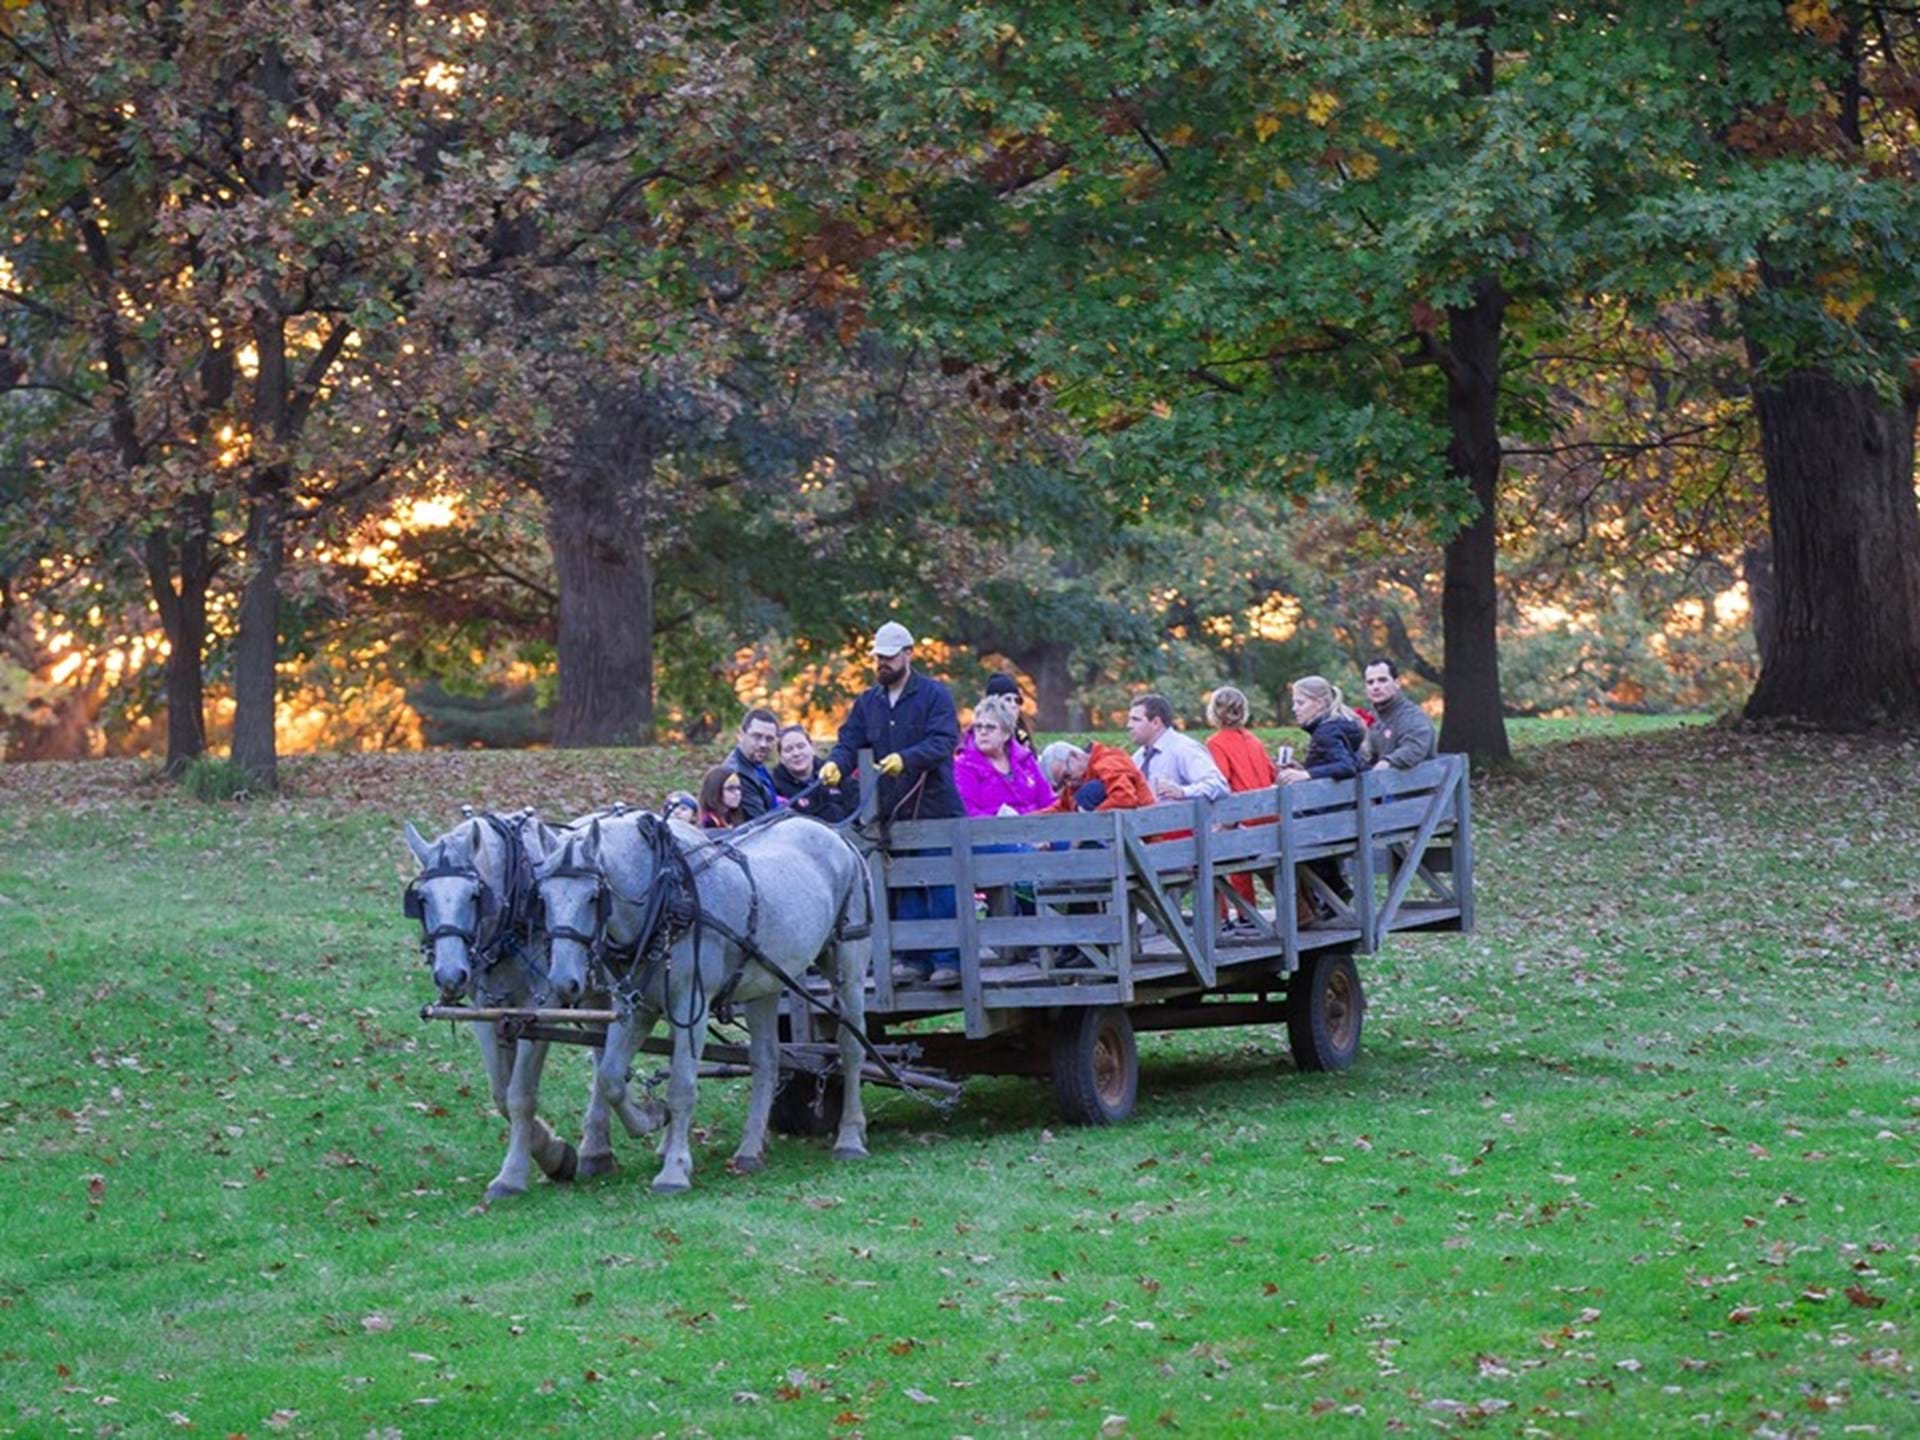 Wagon ride with Percheron draft horses